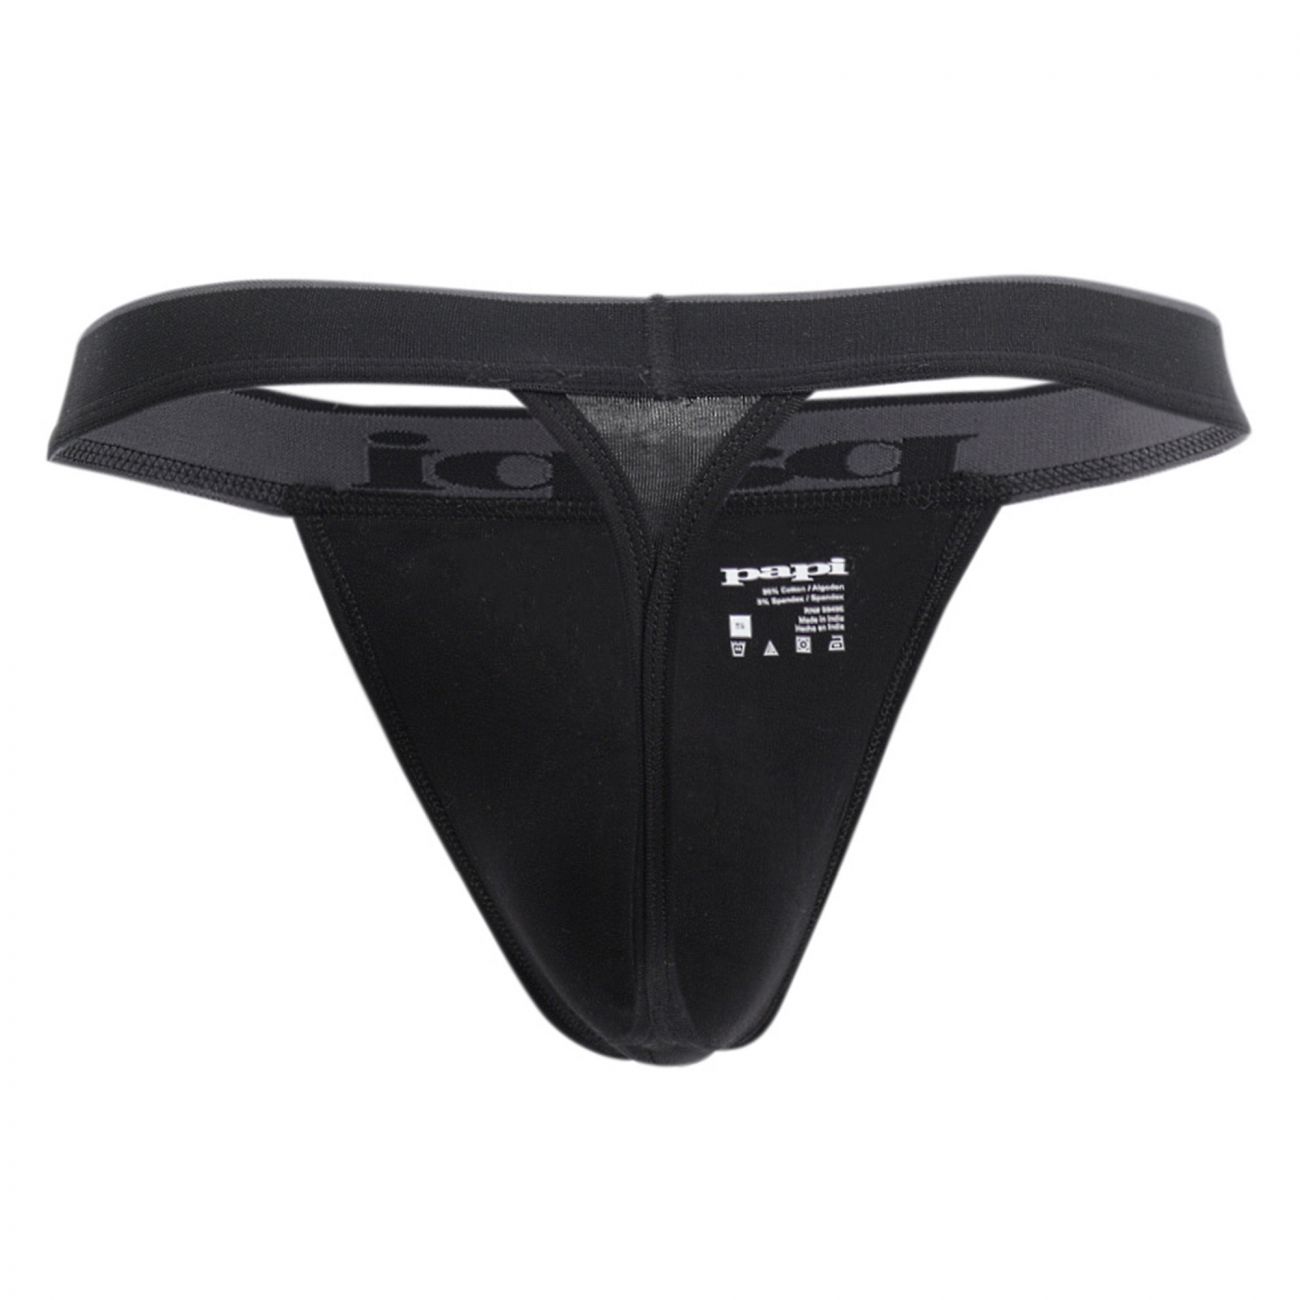 Mens Underwear: Papi 980902-001 3PK Cotton Stretch Thong | eBay